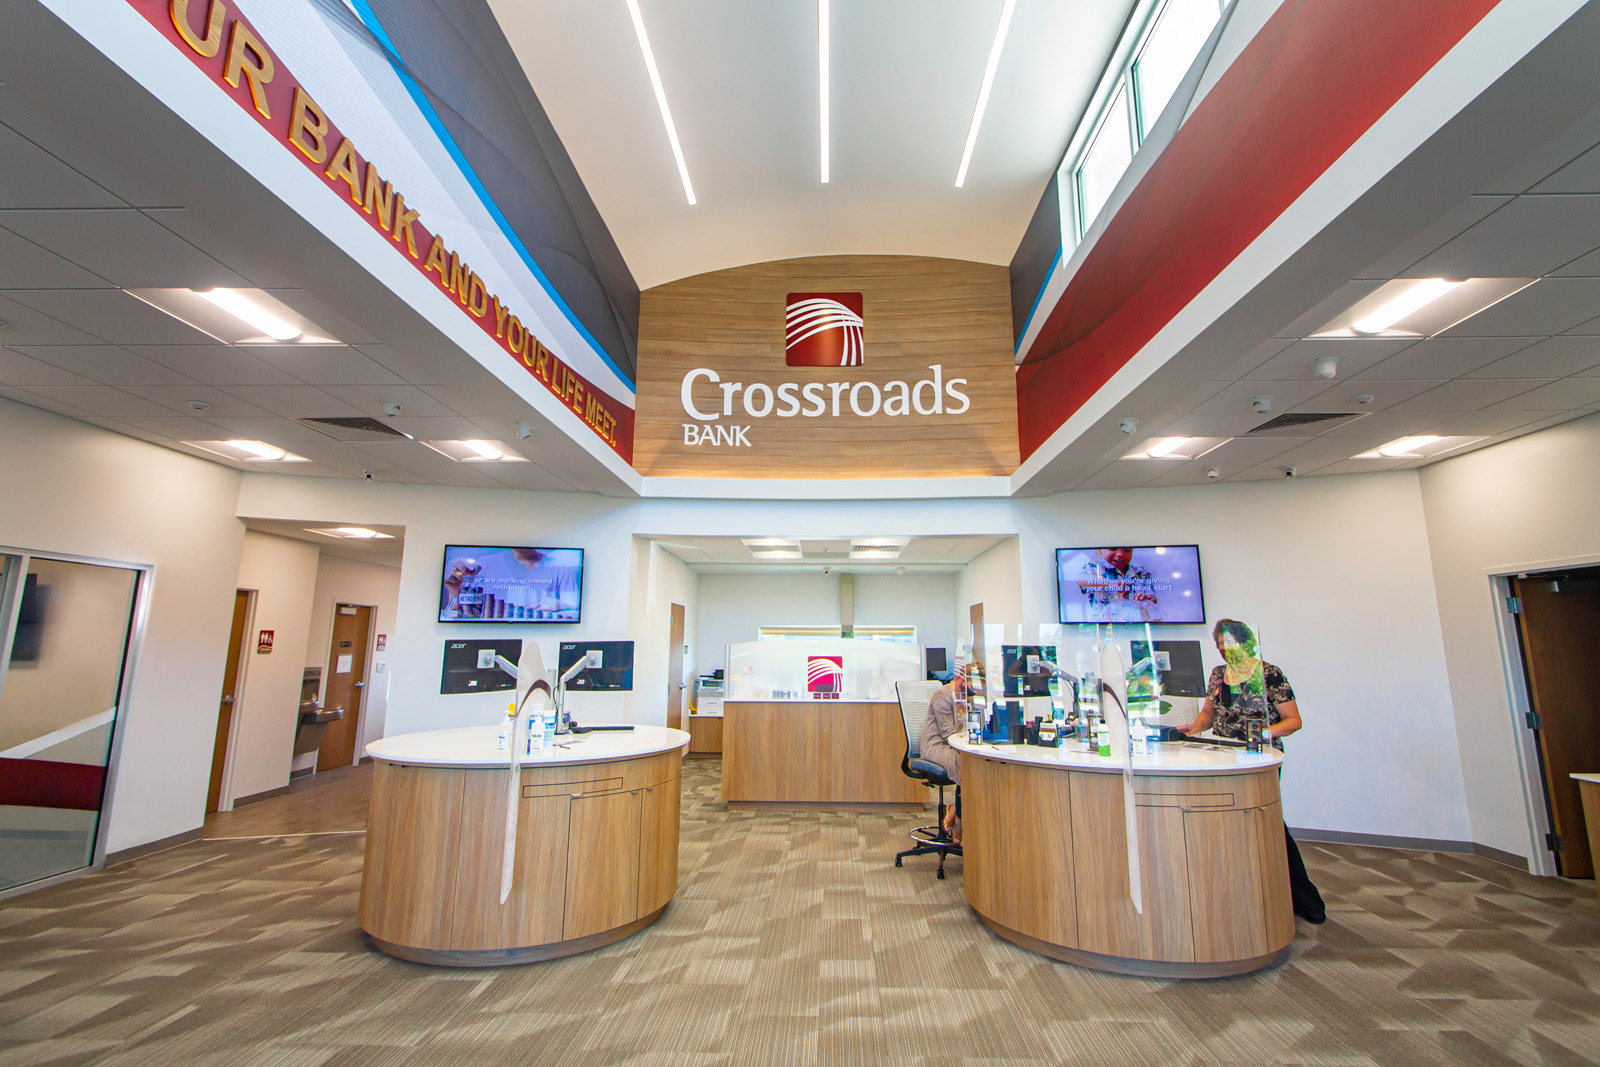 Crossroads Bank interior